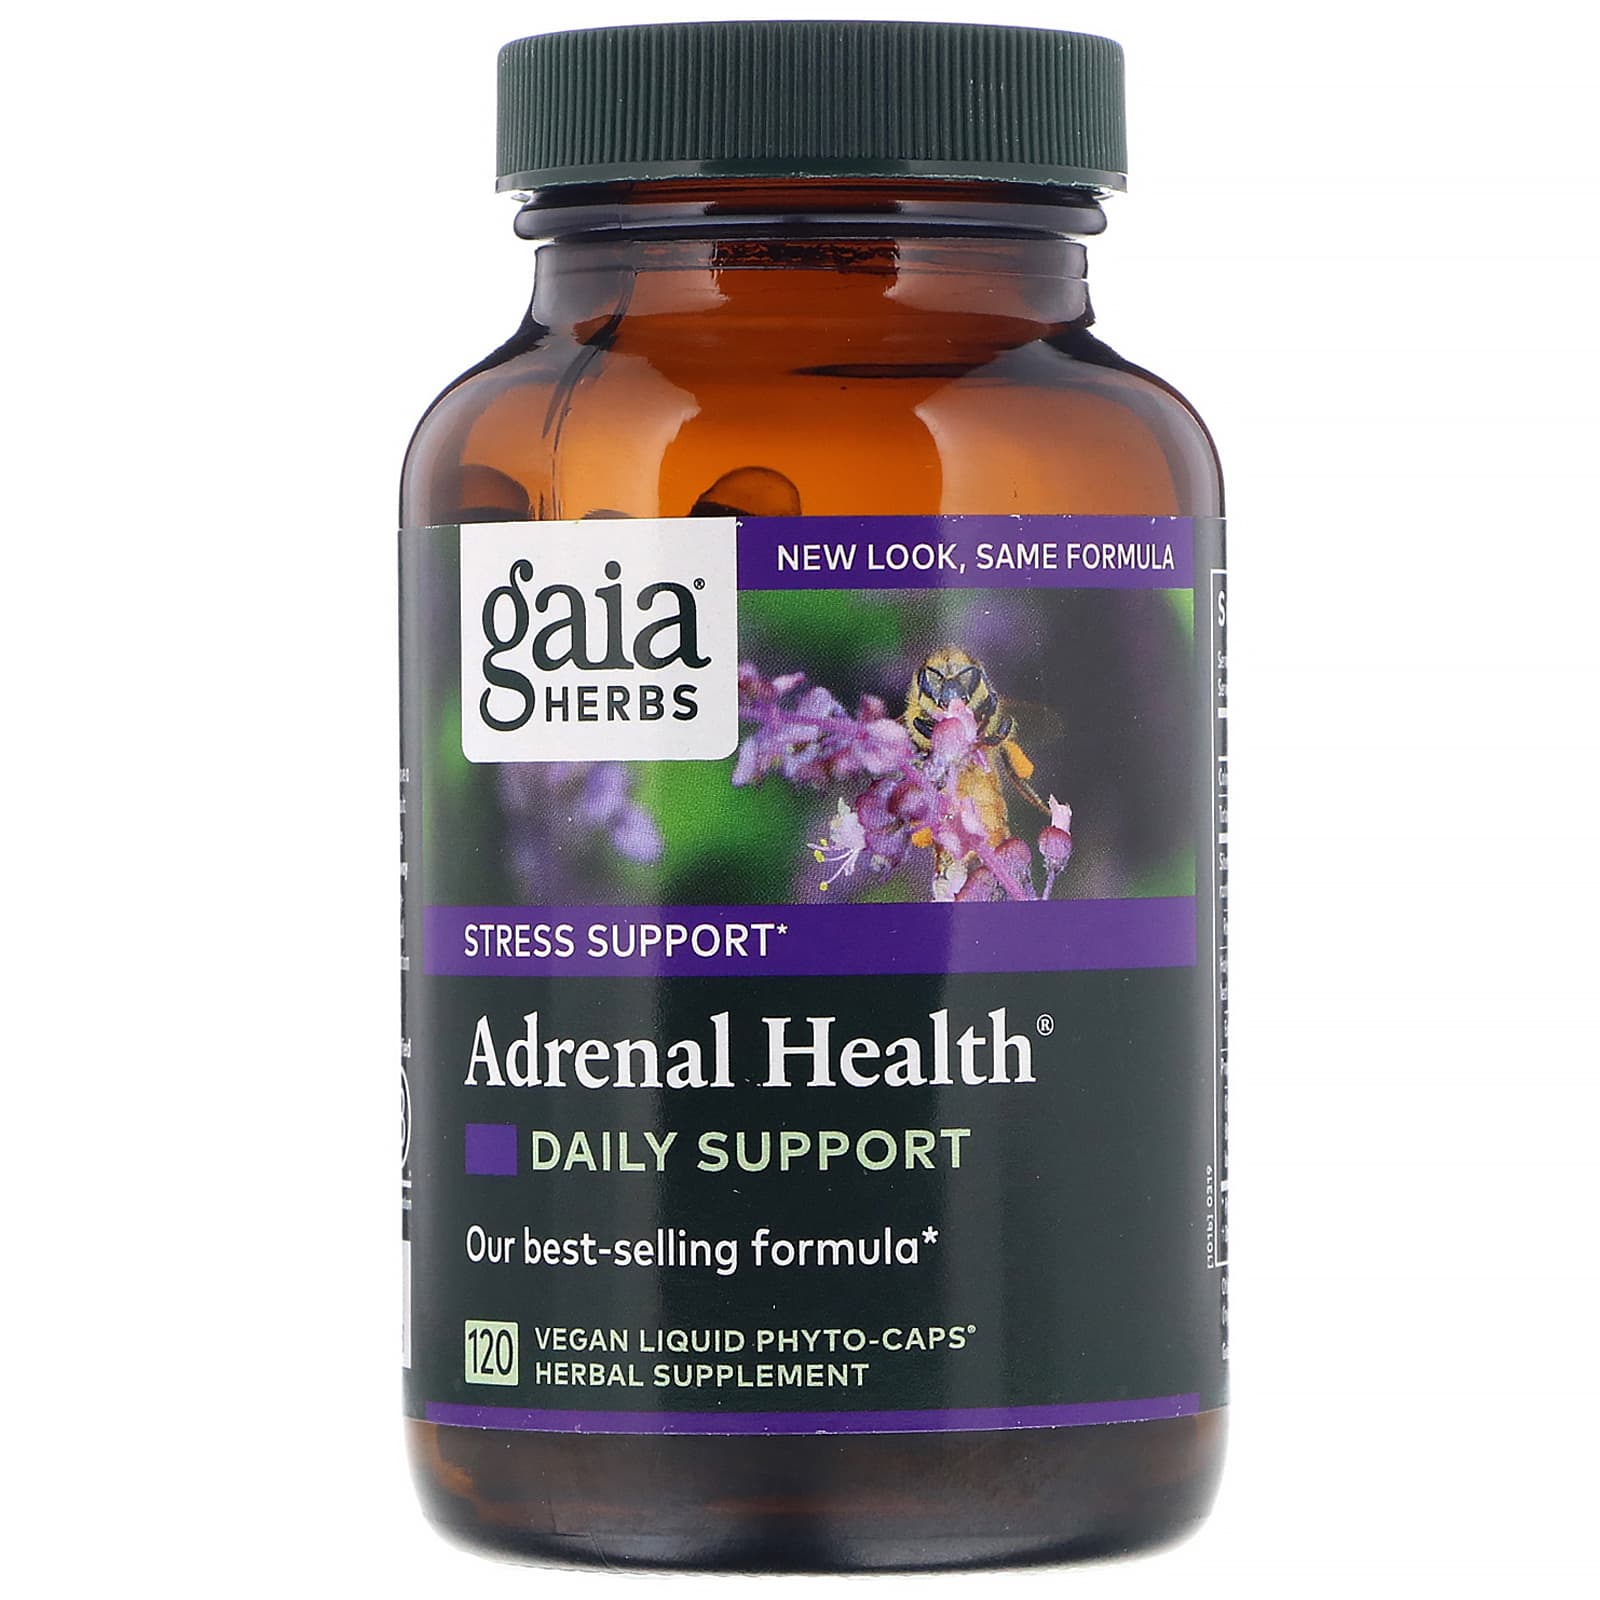 Gaia herbs adrenal health sisley volumizing spray texture density